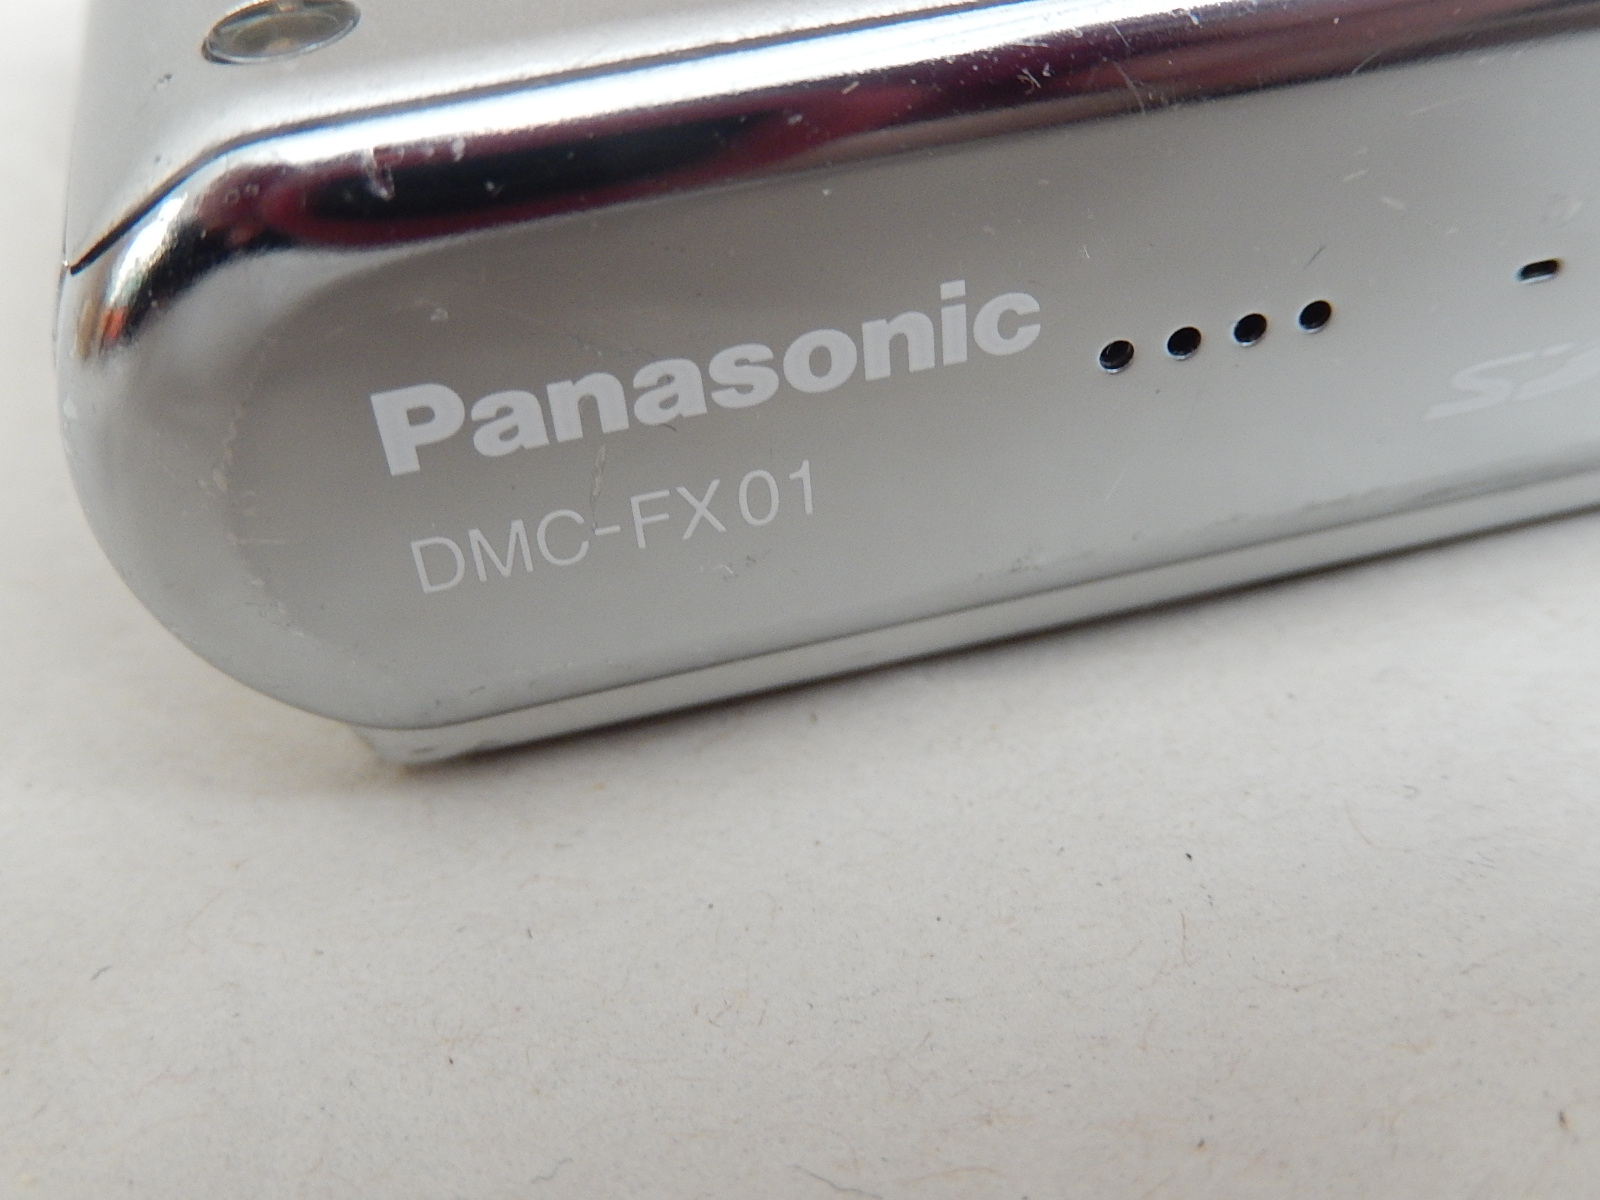 APPAREIL PHOTO PANASONIC DMC-FX01 HORS-SERVICE